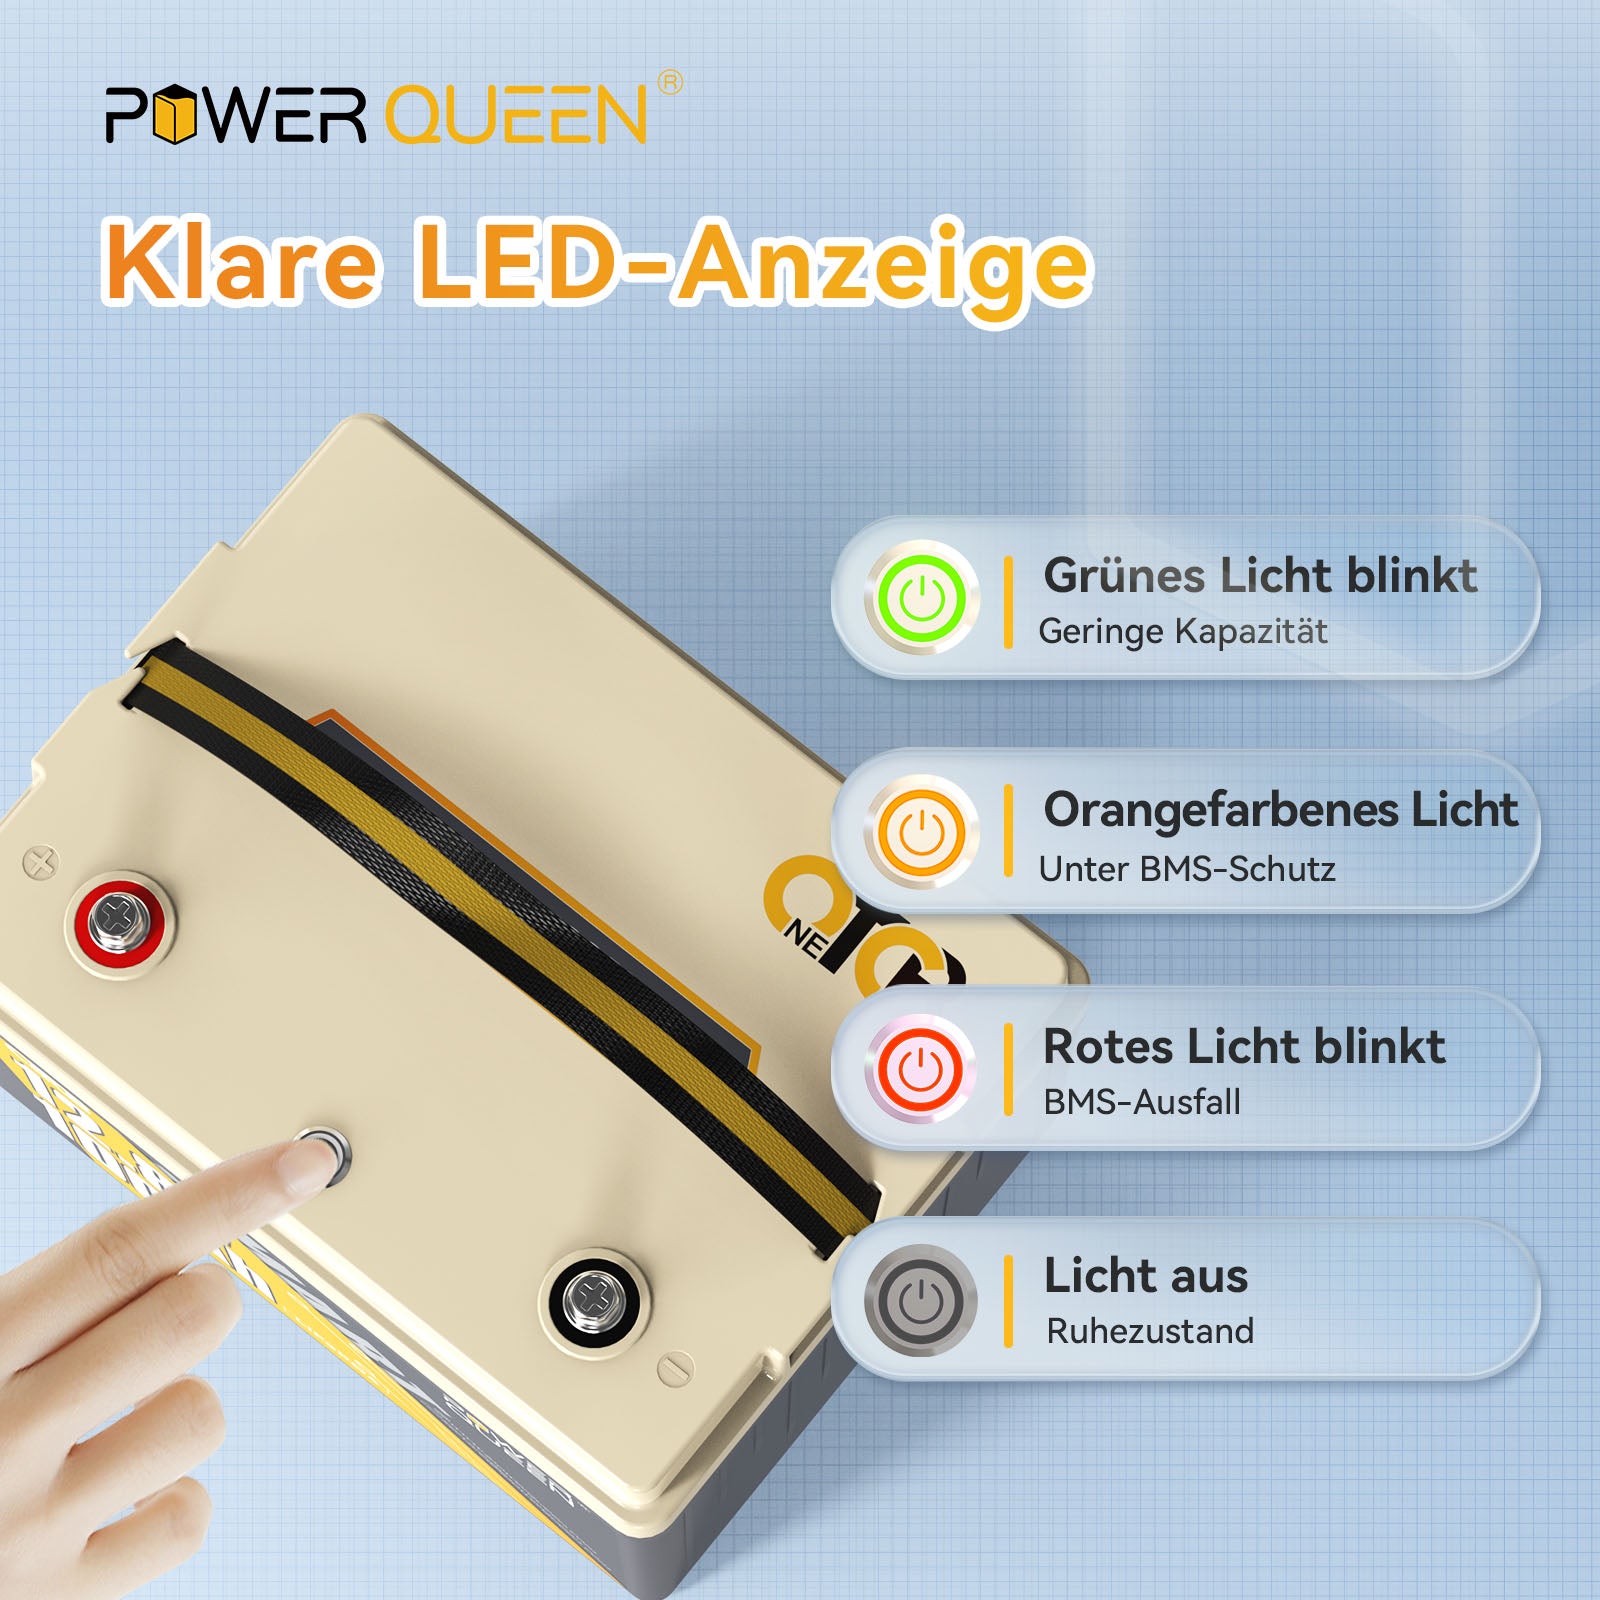 Batterie intelligente LiFePO4 Power Queen 12,8 V 100 Ah OTCB, BMS 100 A intégré